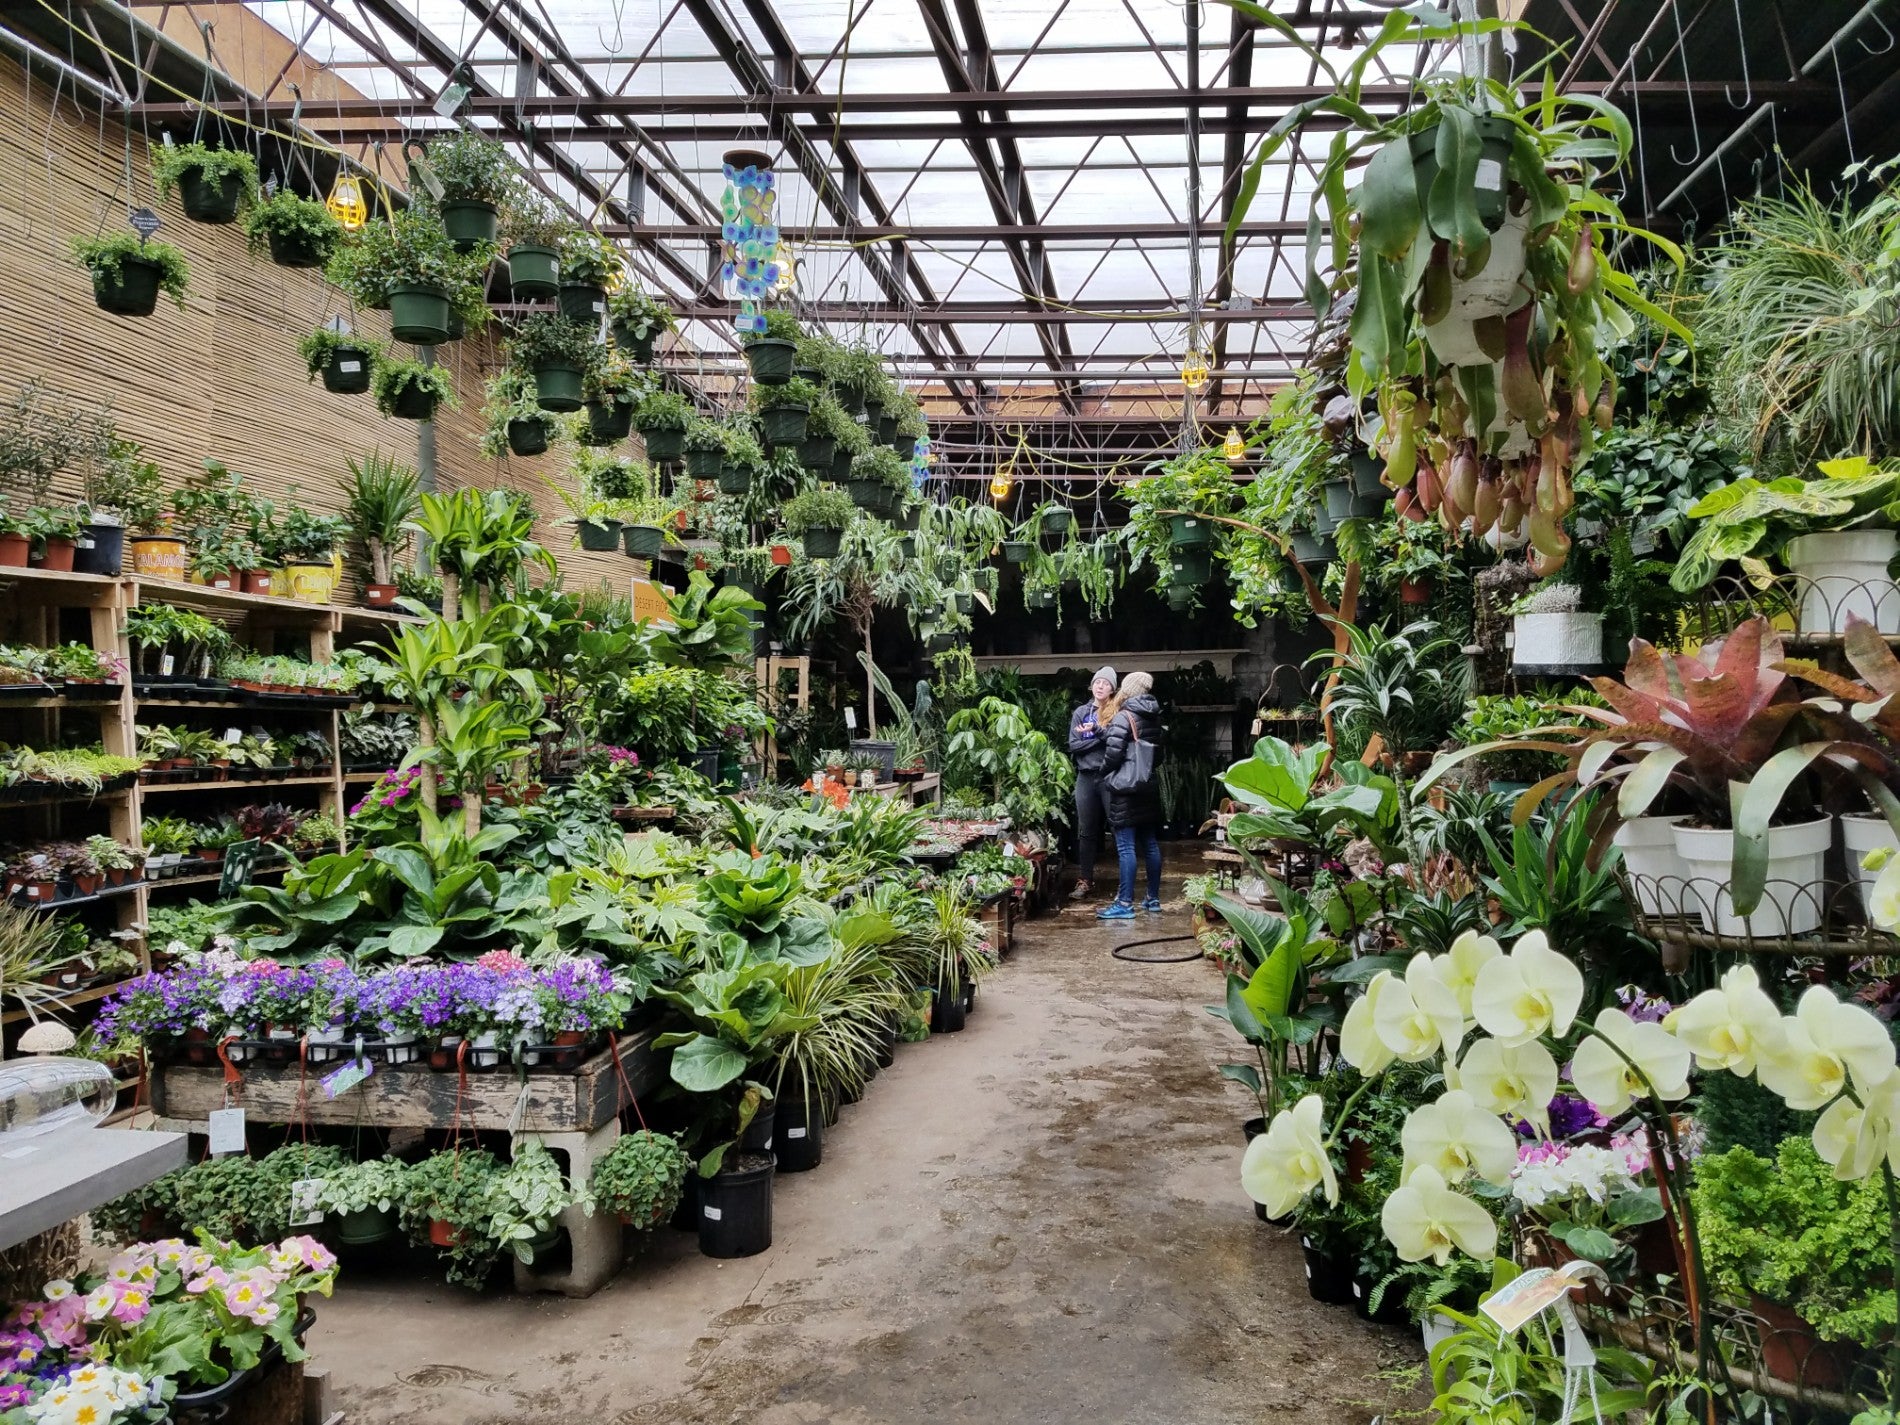 Mahoney's Full-Service Florists - Mahoney's Garden Center